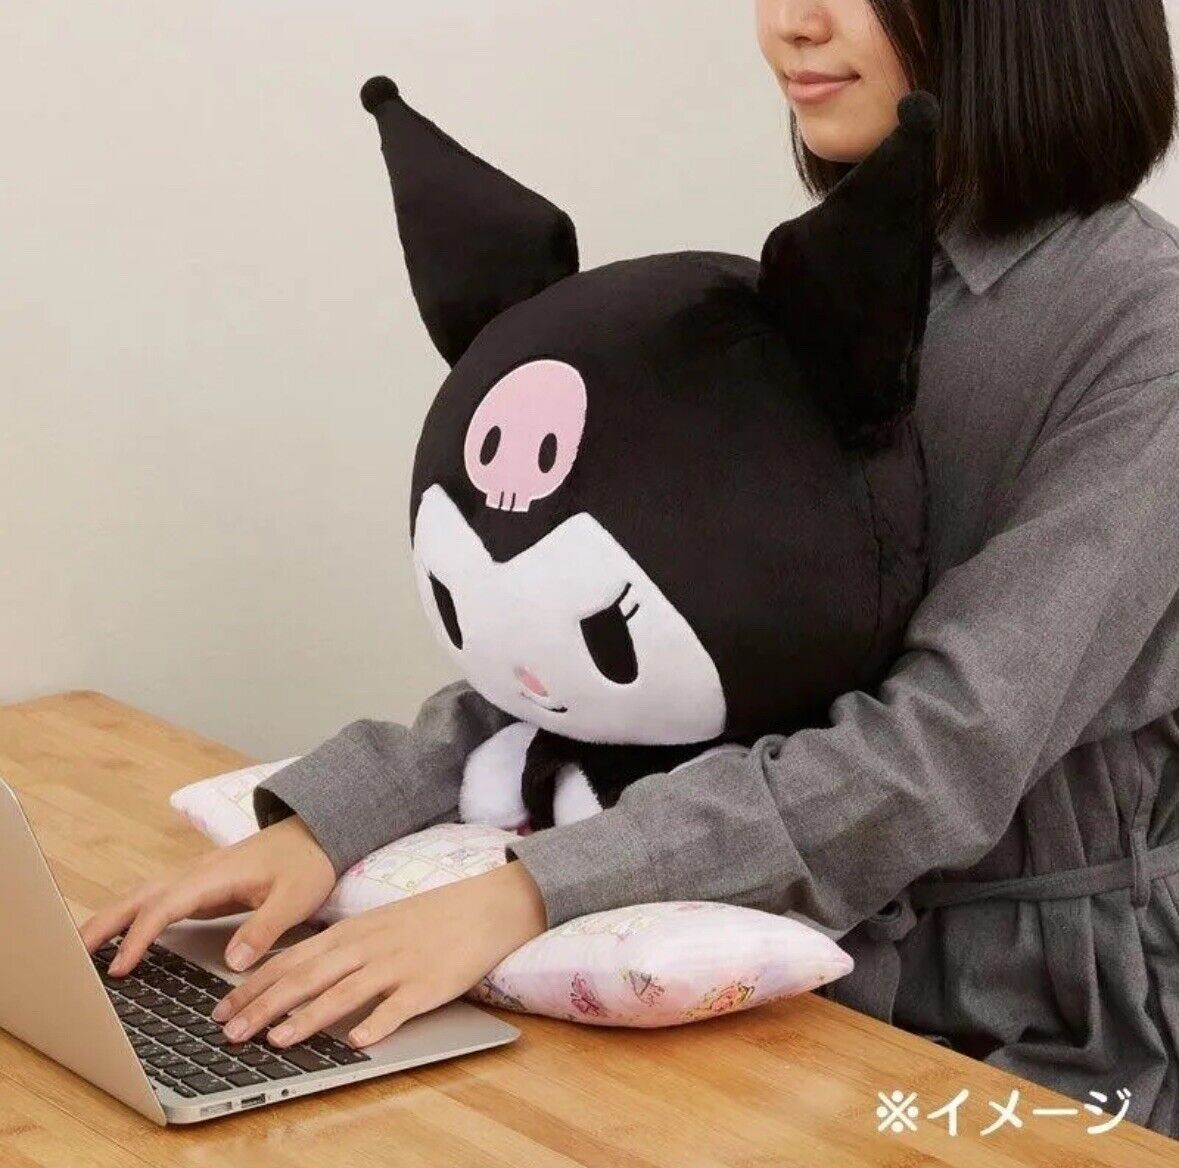 New Bandai Giant Kuromi Keyboard Wrist Rest Plushie Correct Sitting Position